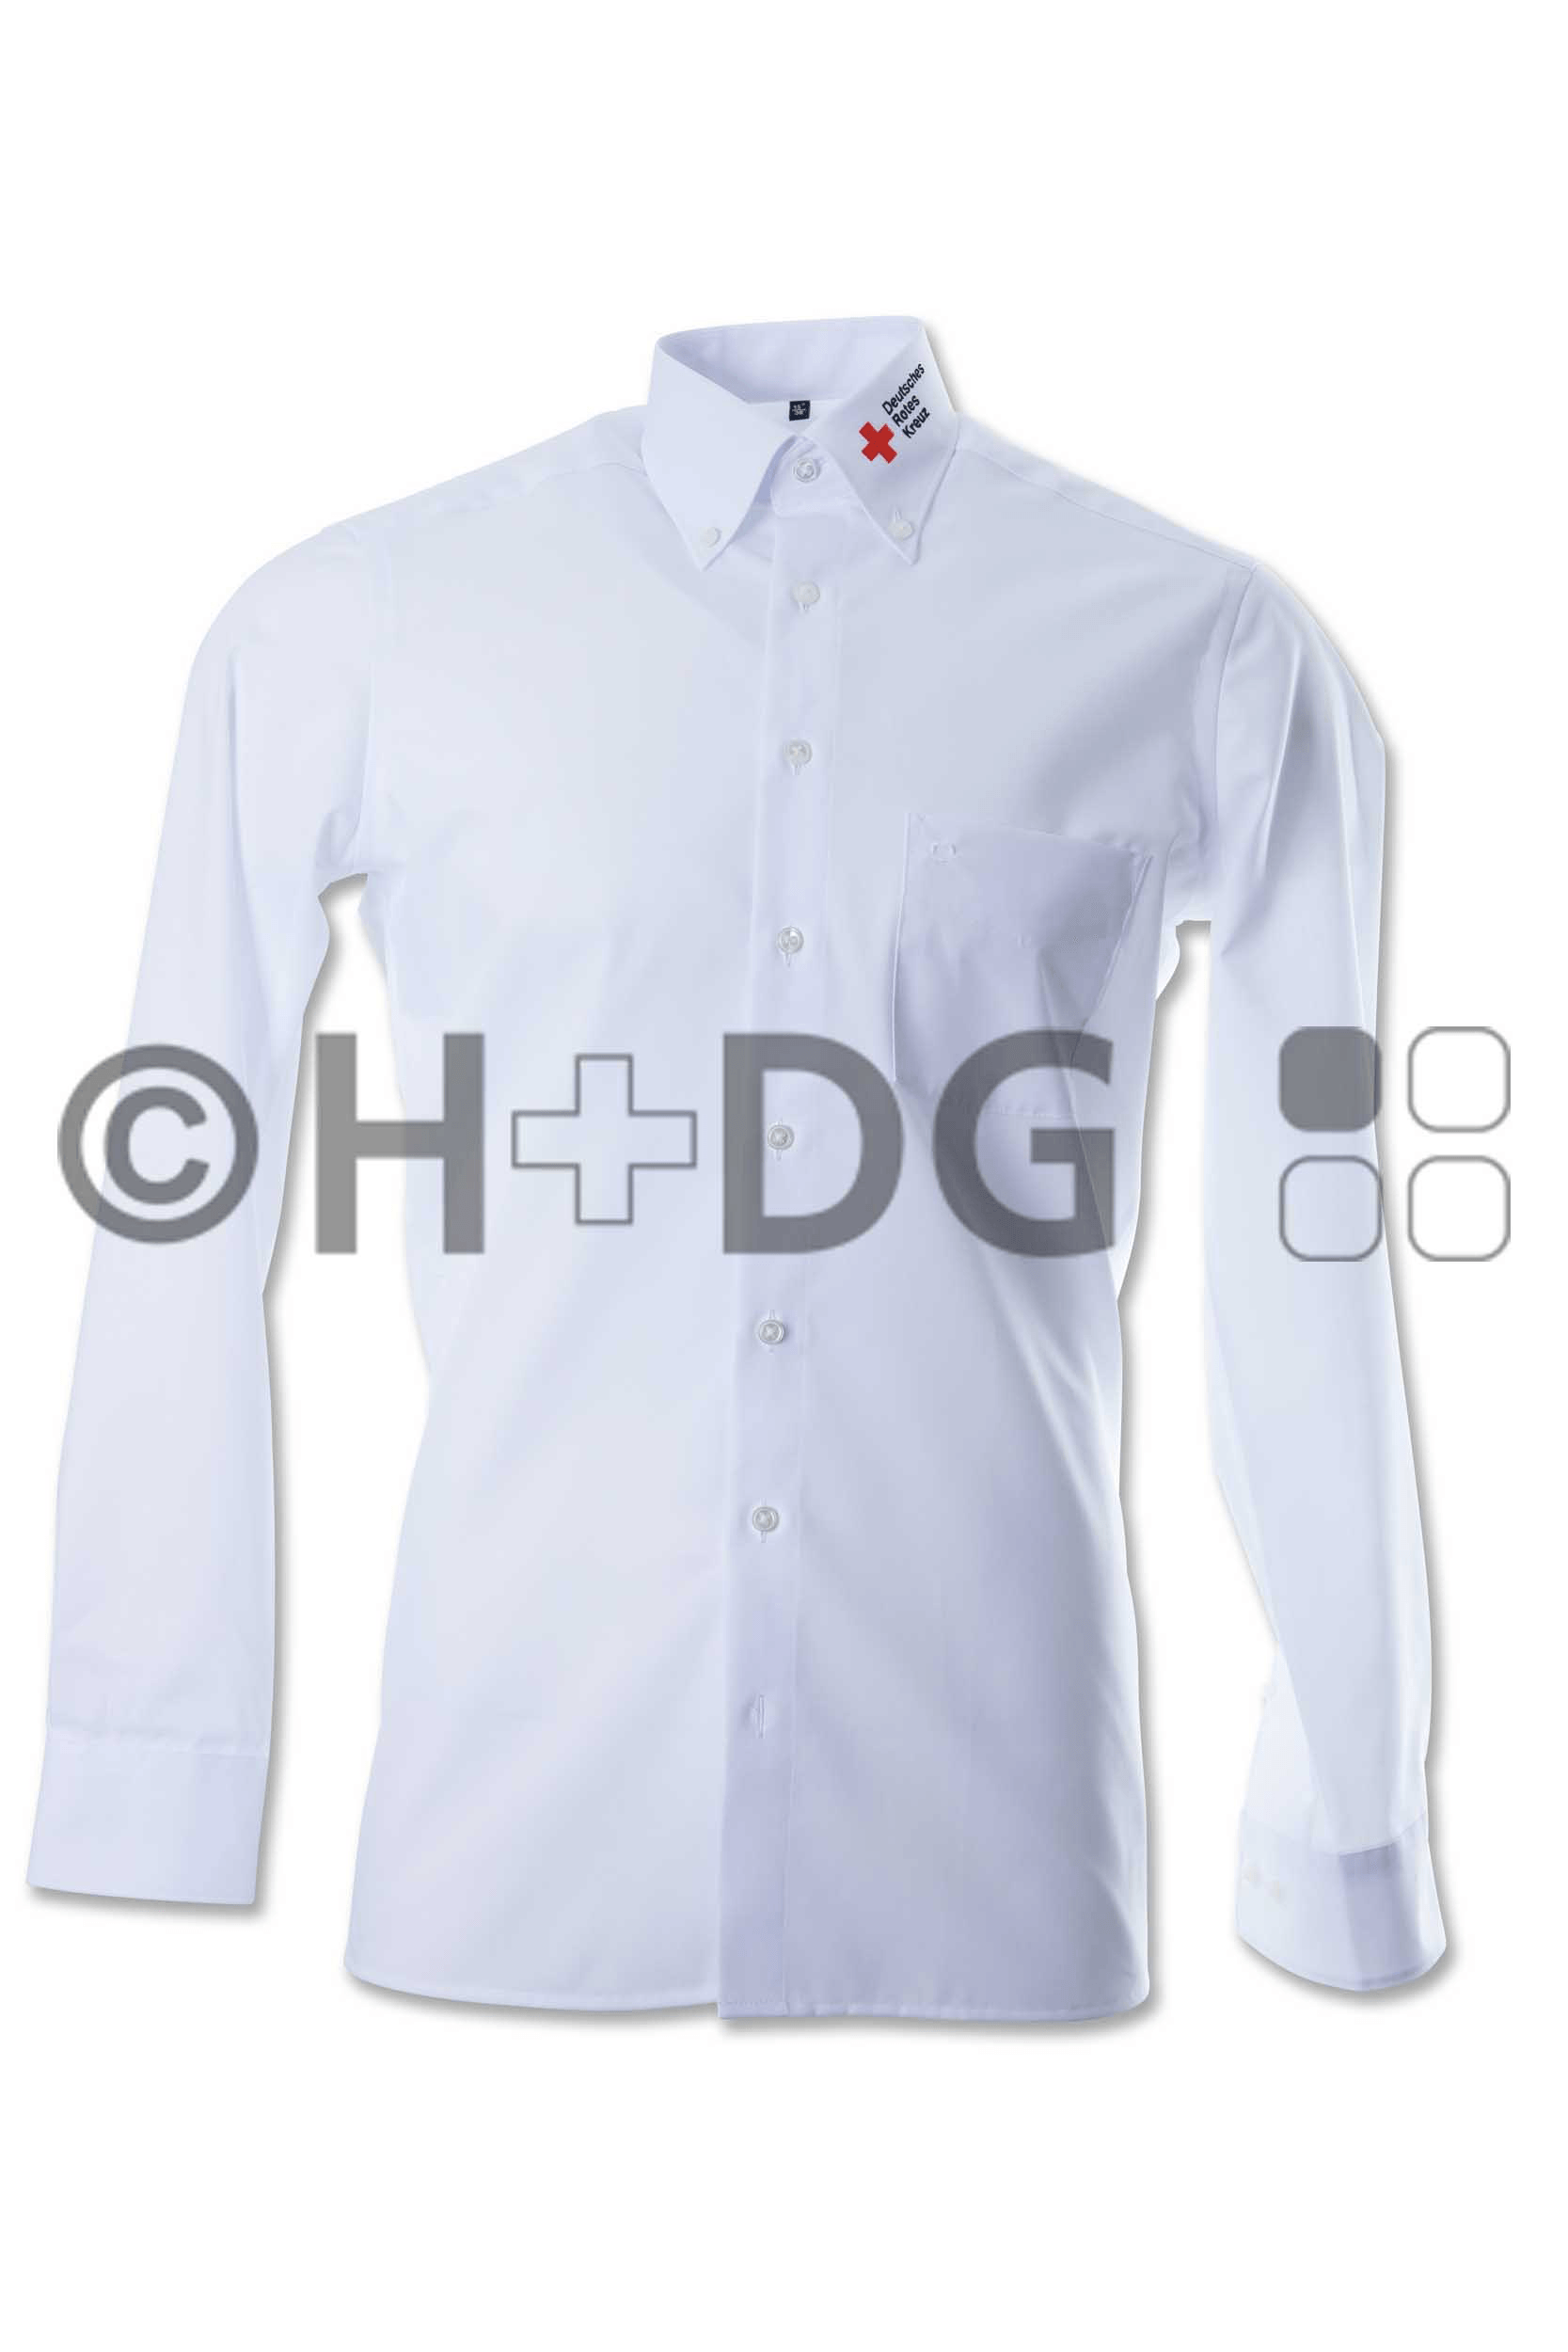 DRK-Olymp-Businesshemd Luxor (modern fit) weiß, oder 1/1-Arm | 1/2-Arm H+DG